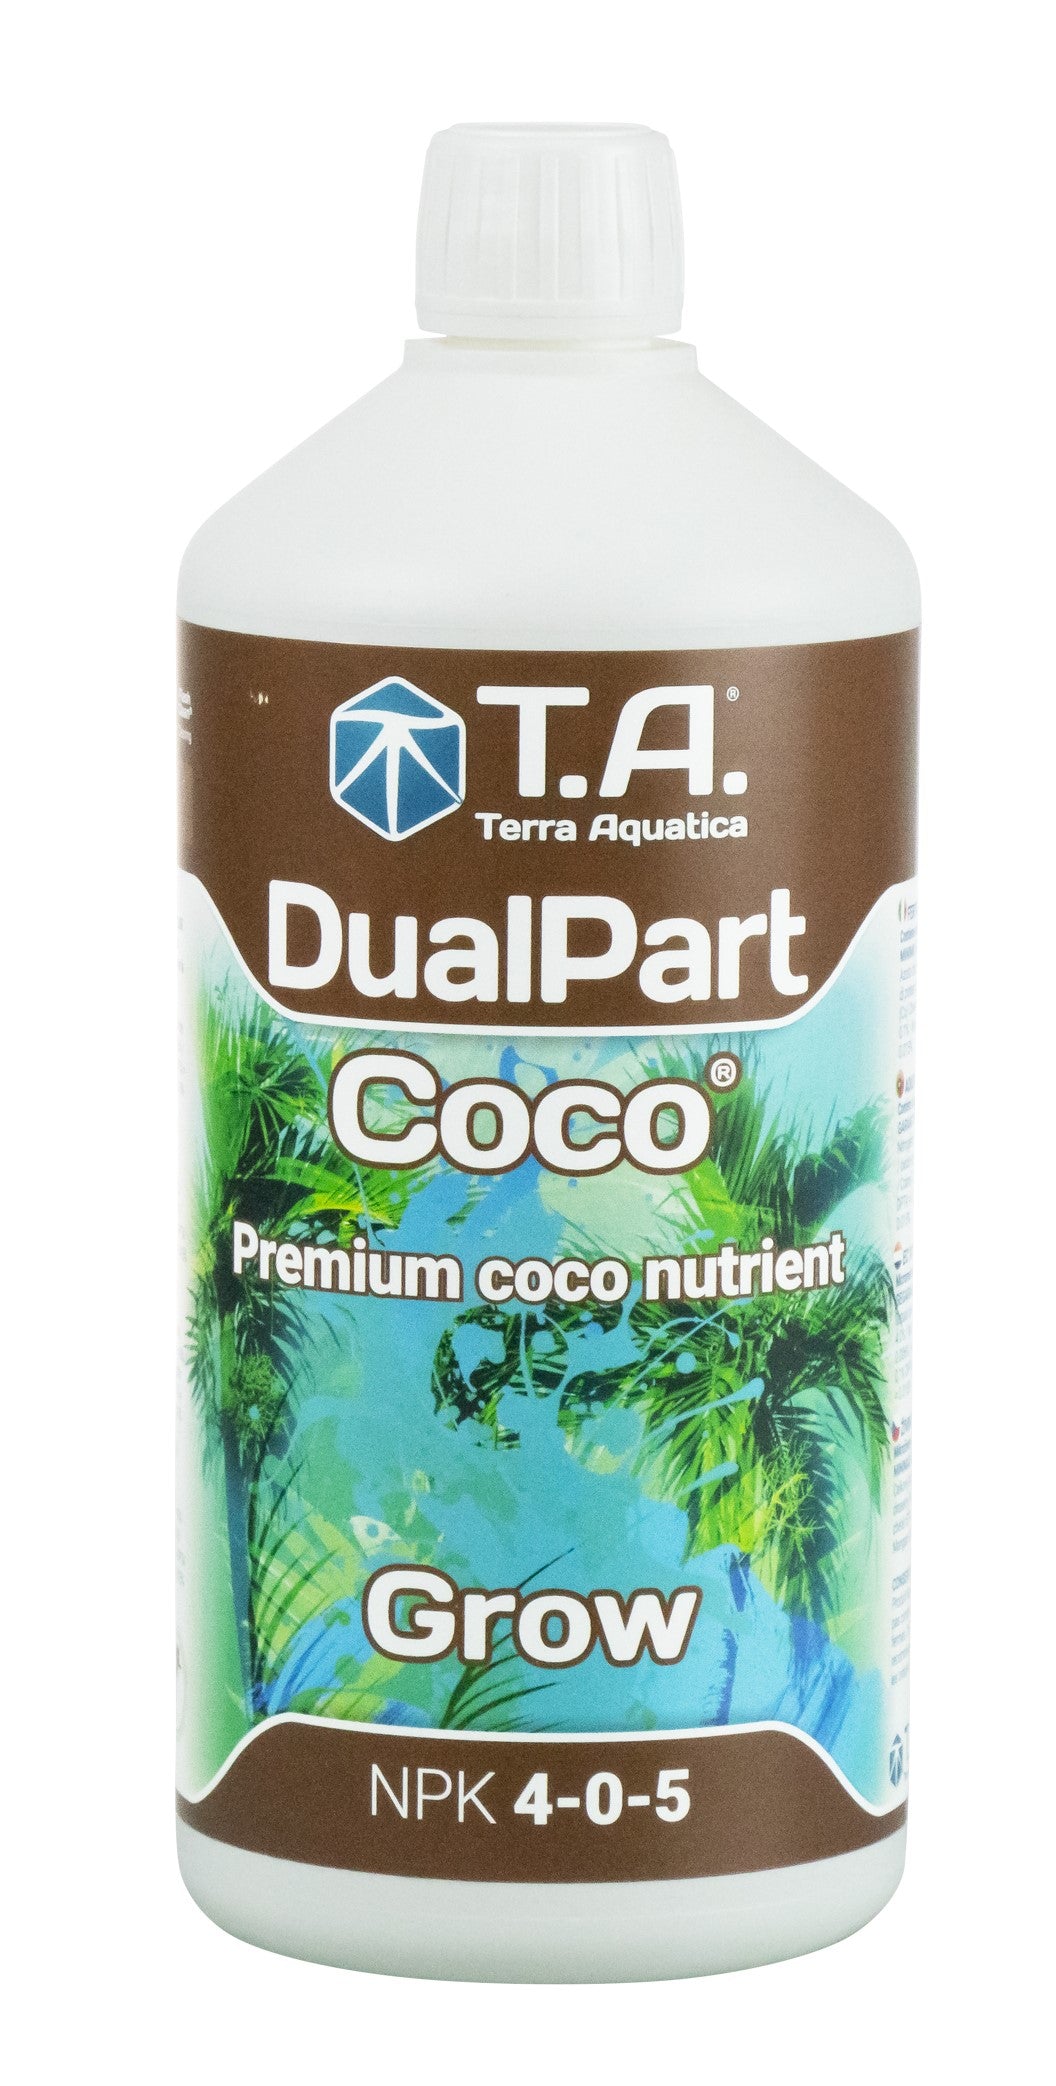 DualPart Coco Grow